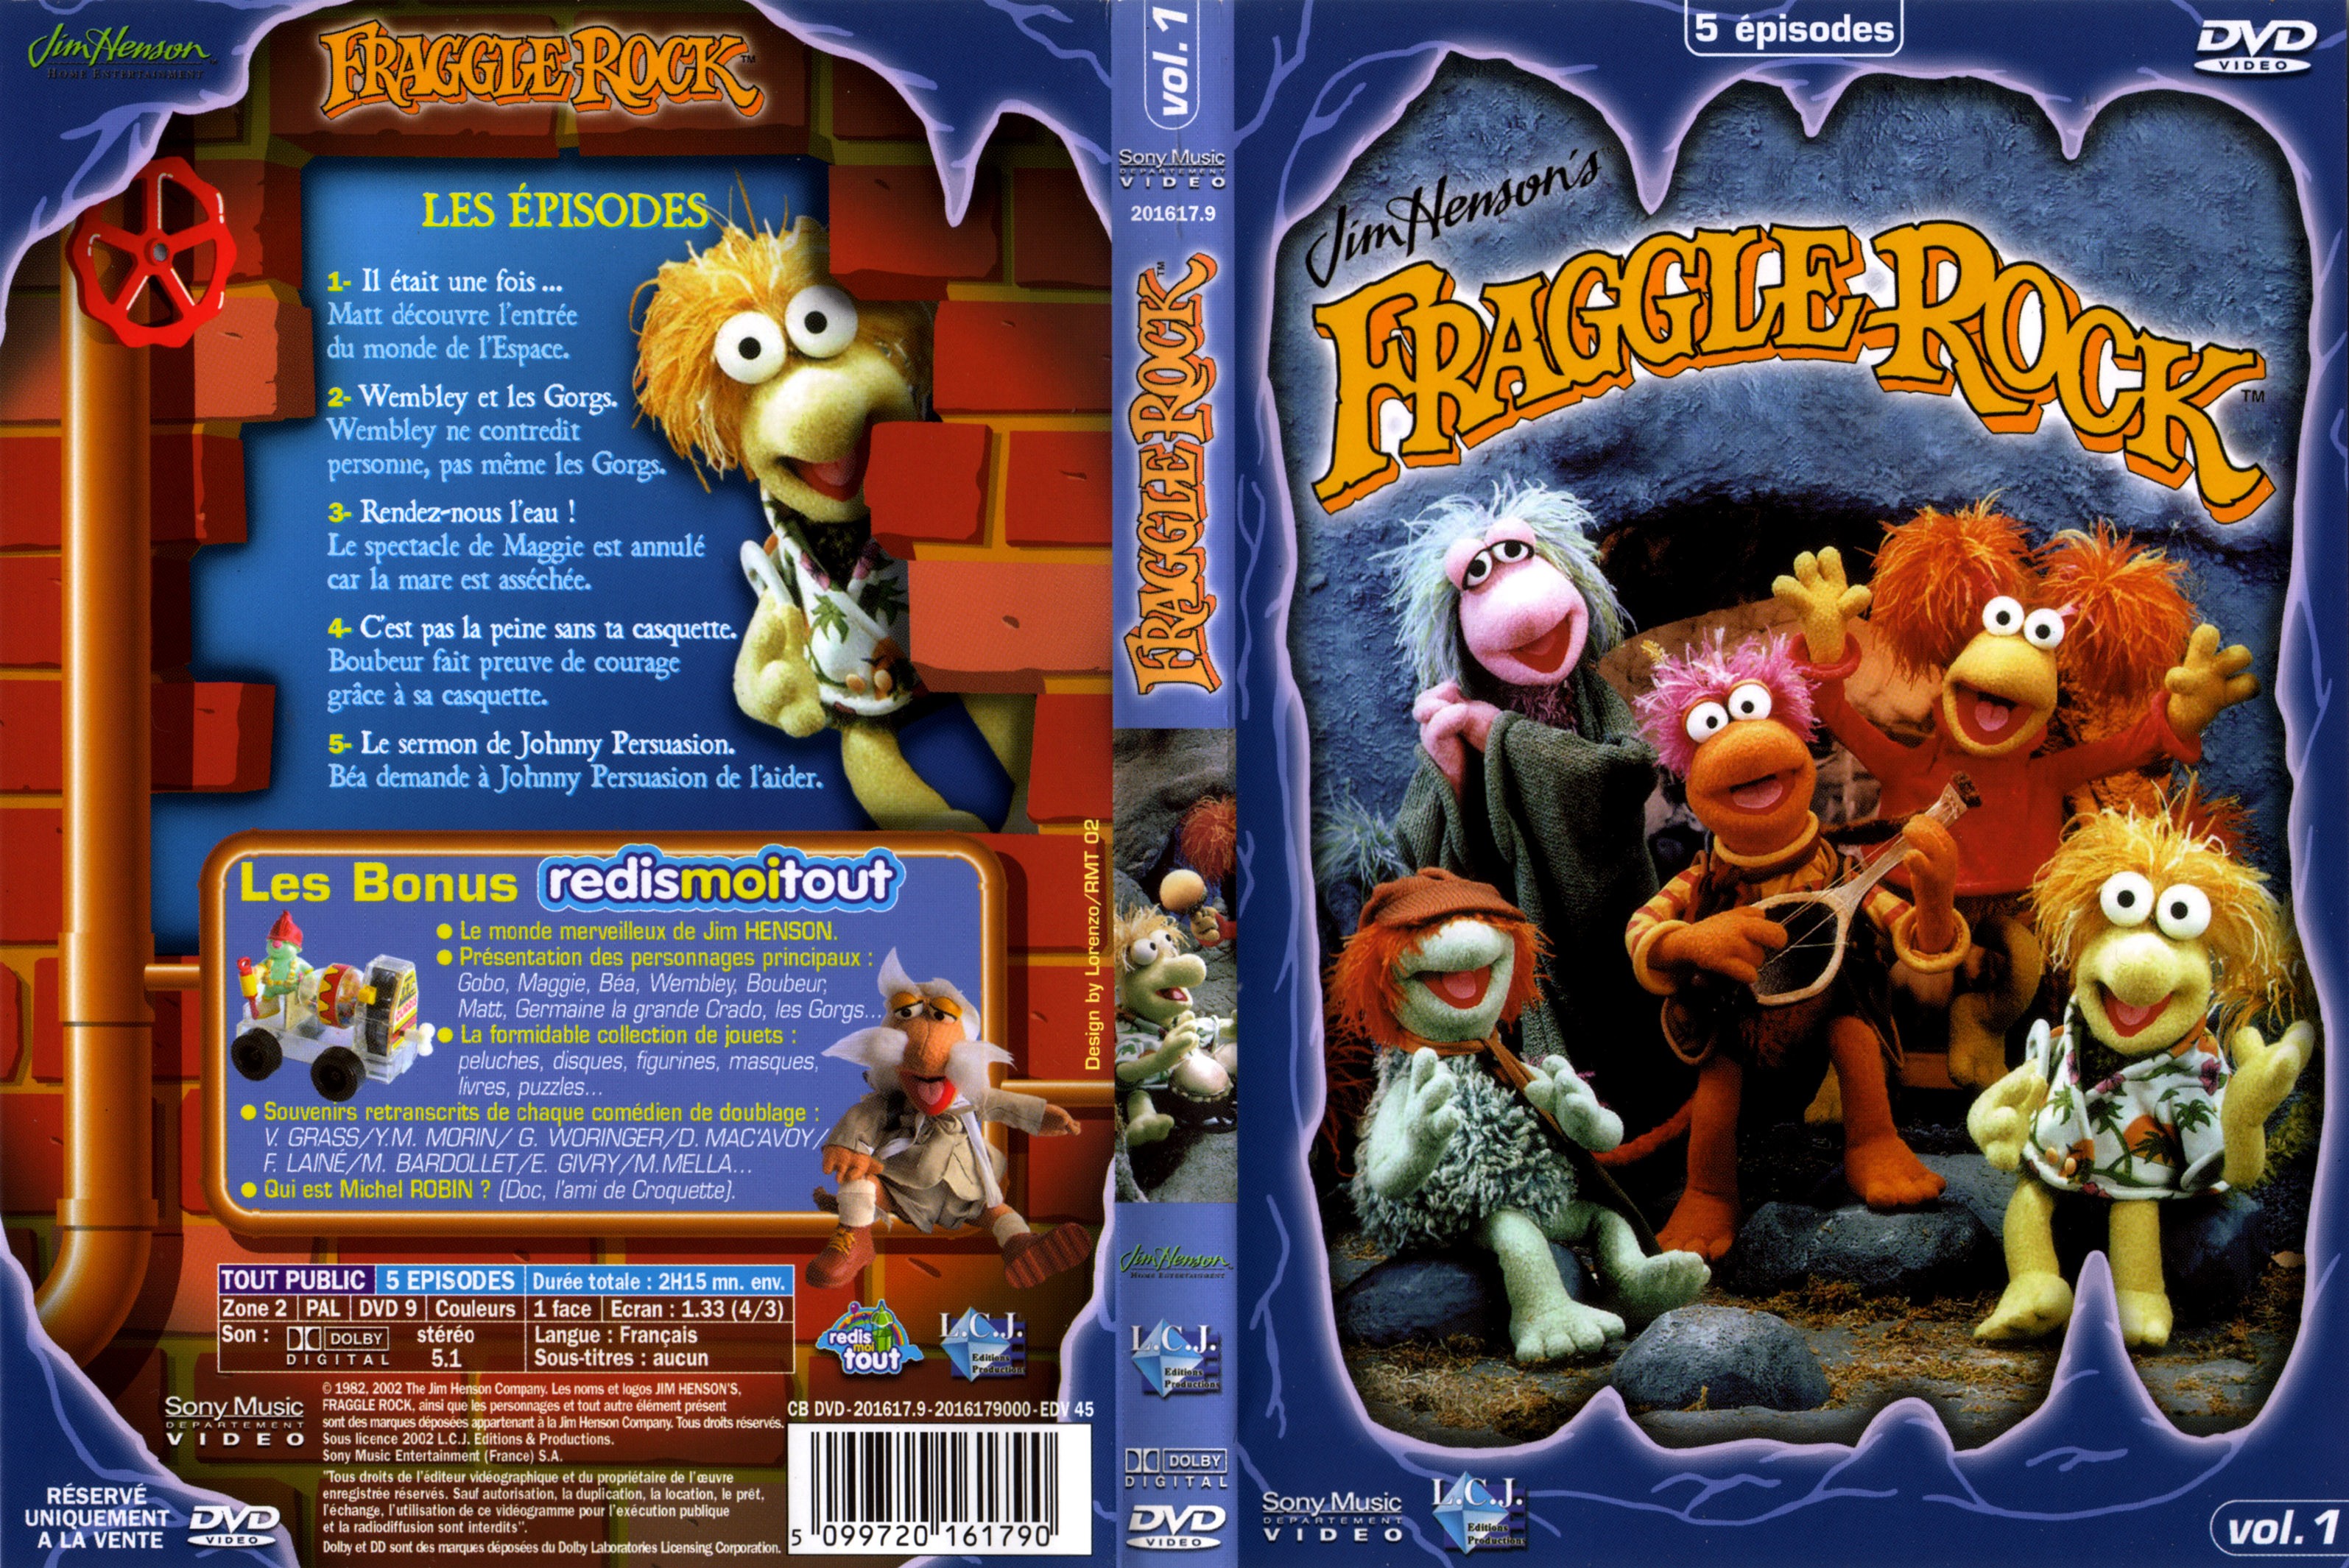 Jaquette DVD Fraggle rock vol 1